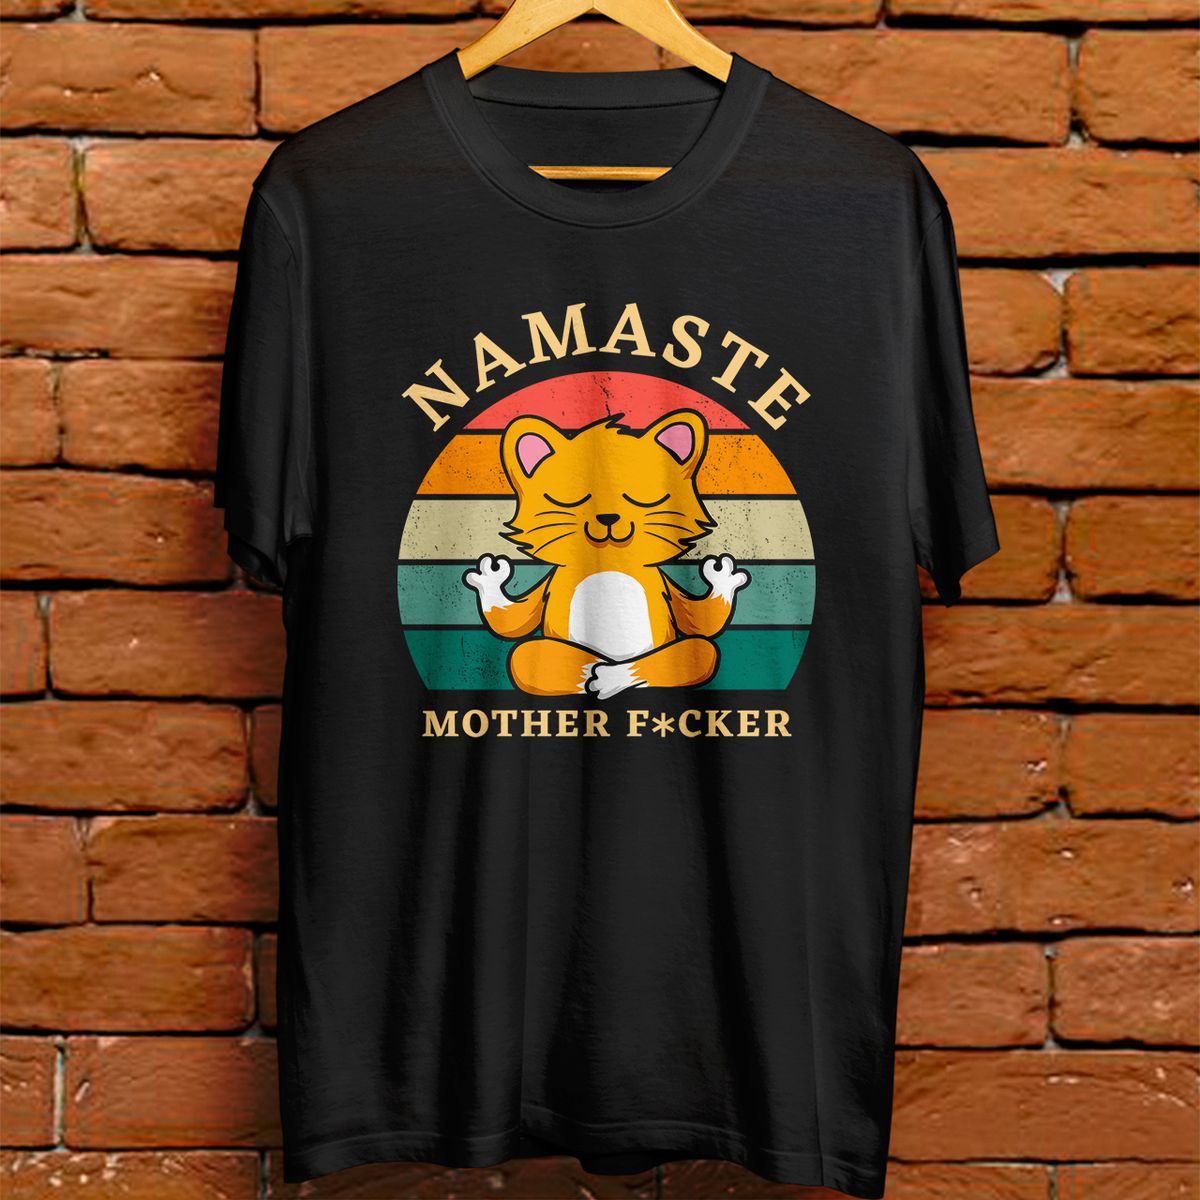 Nome do produto: Camiseta - Namaste Mother Fucker